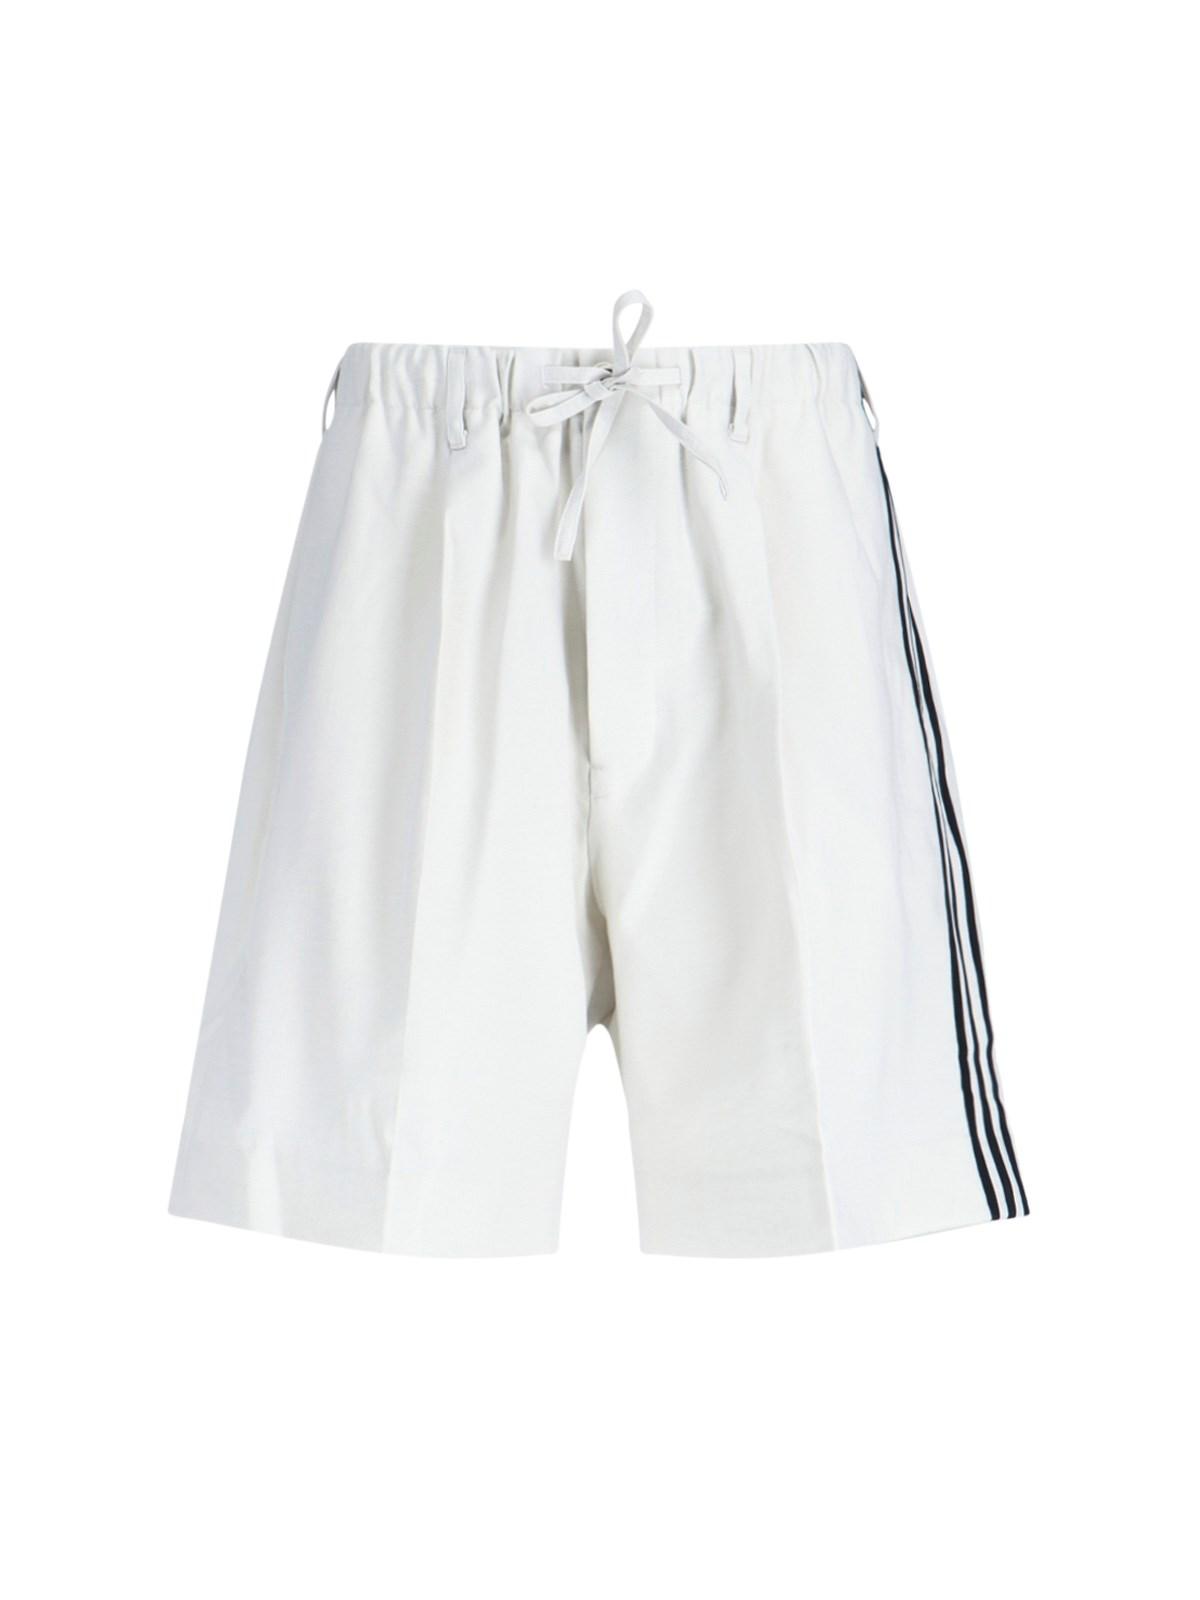 Y-3 '3-stripe' Shorts in White | Lyst